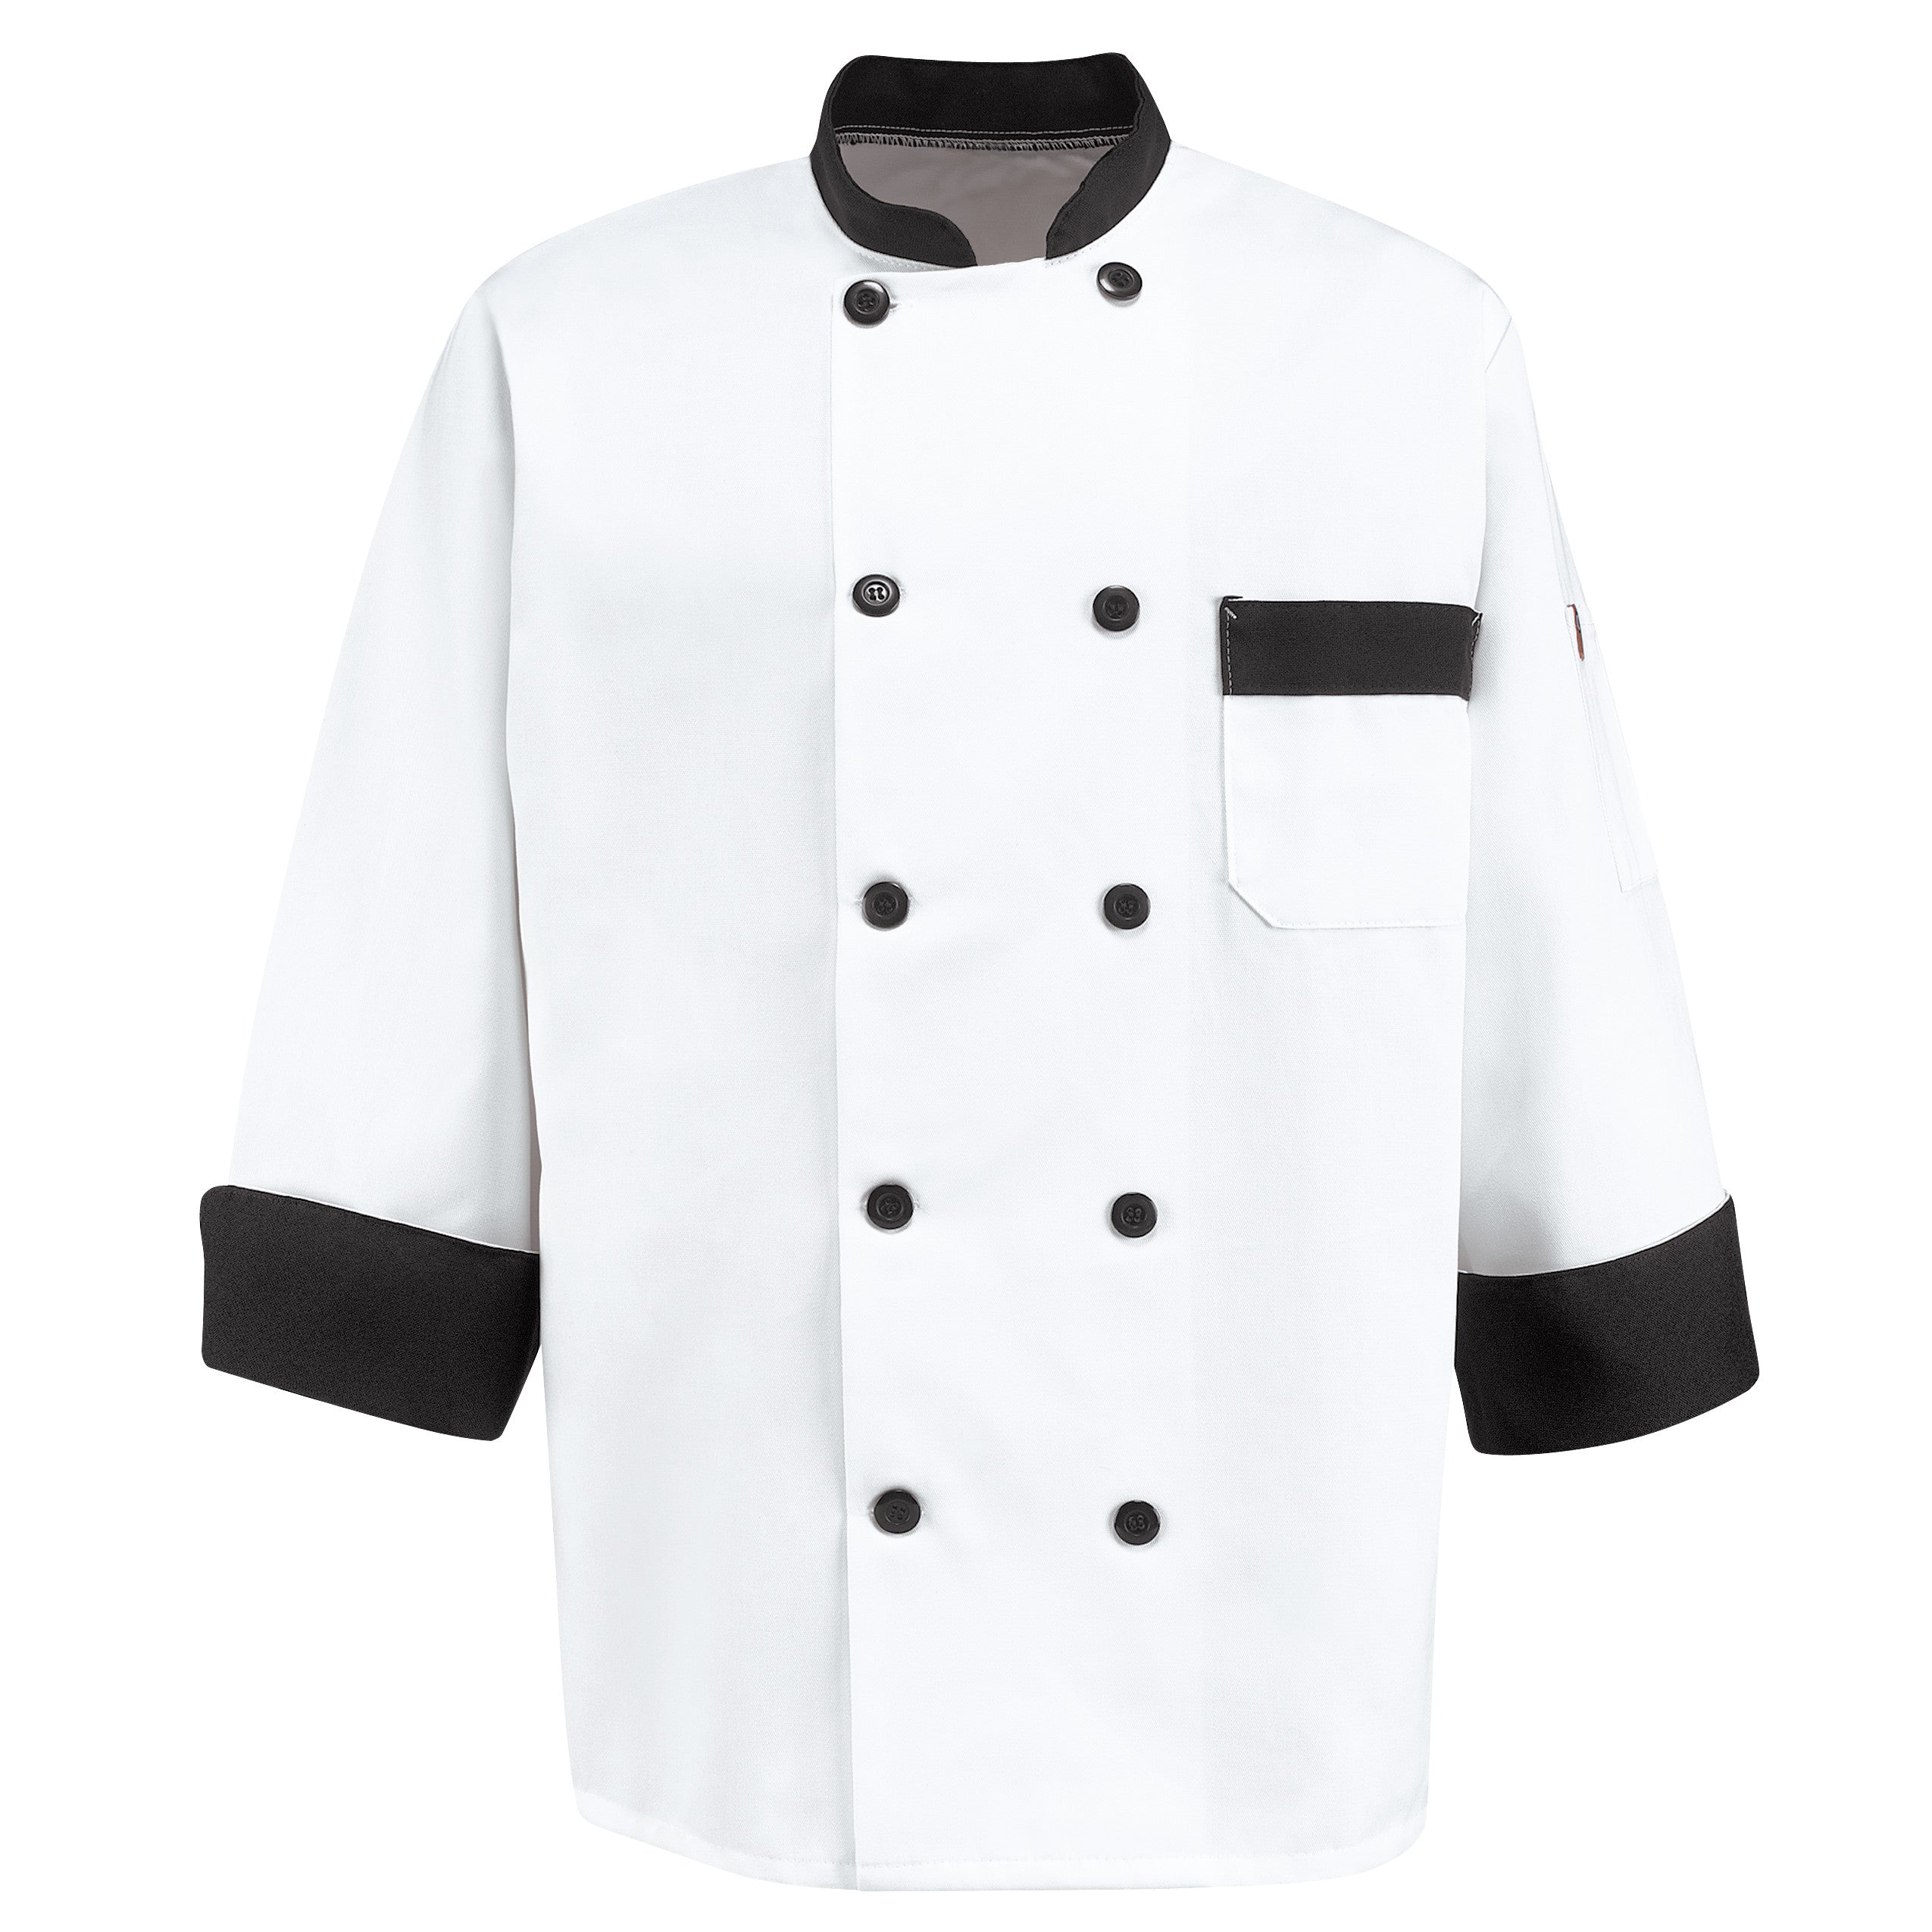 Garnish Chef Coat KT74 - White/BlackTrim